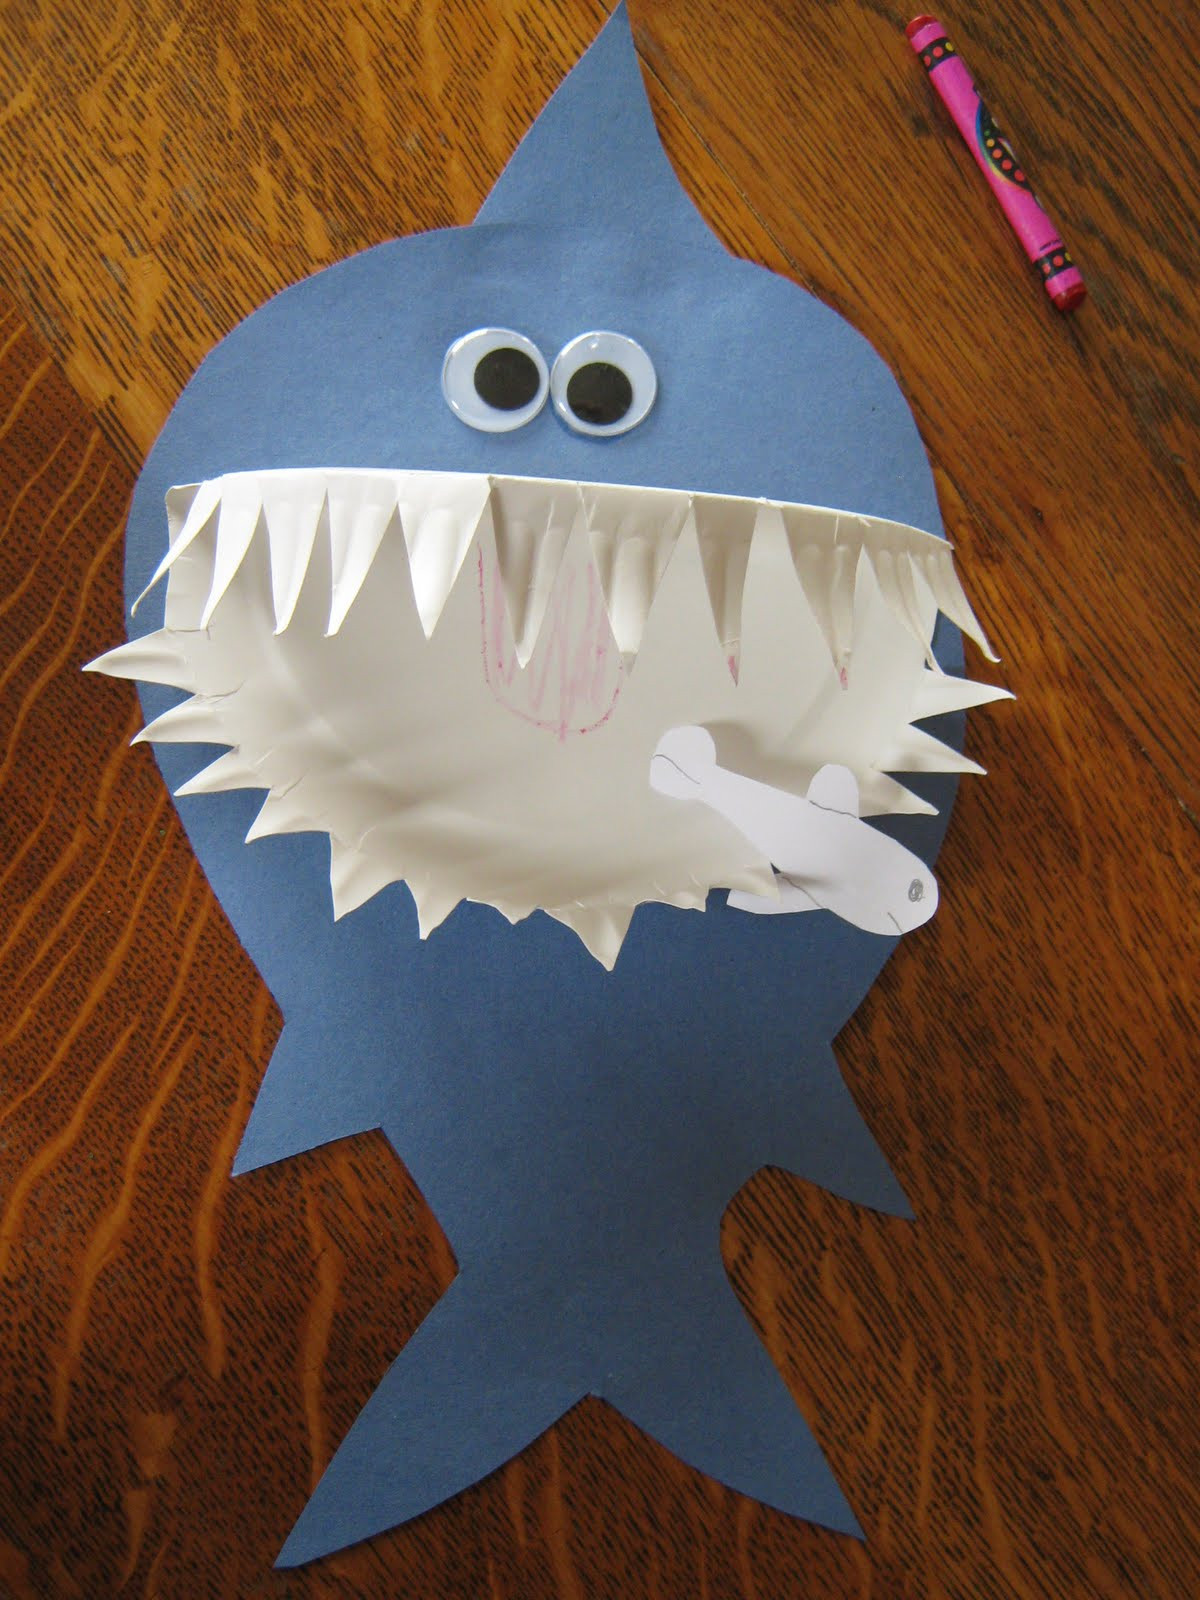 Arts And Crafts Activities For Preschoolers
 Shark Paper Plate Craft